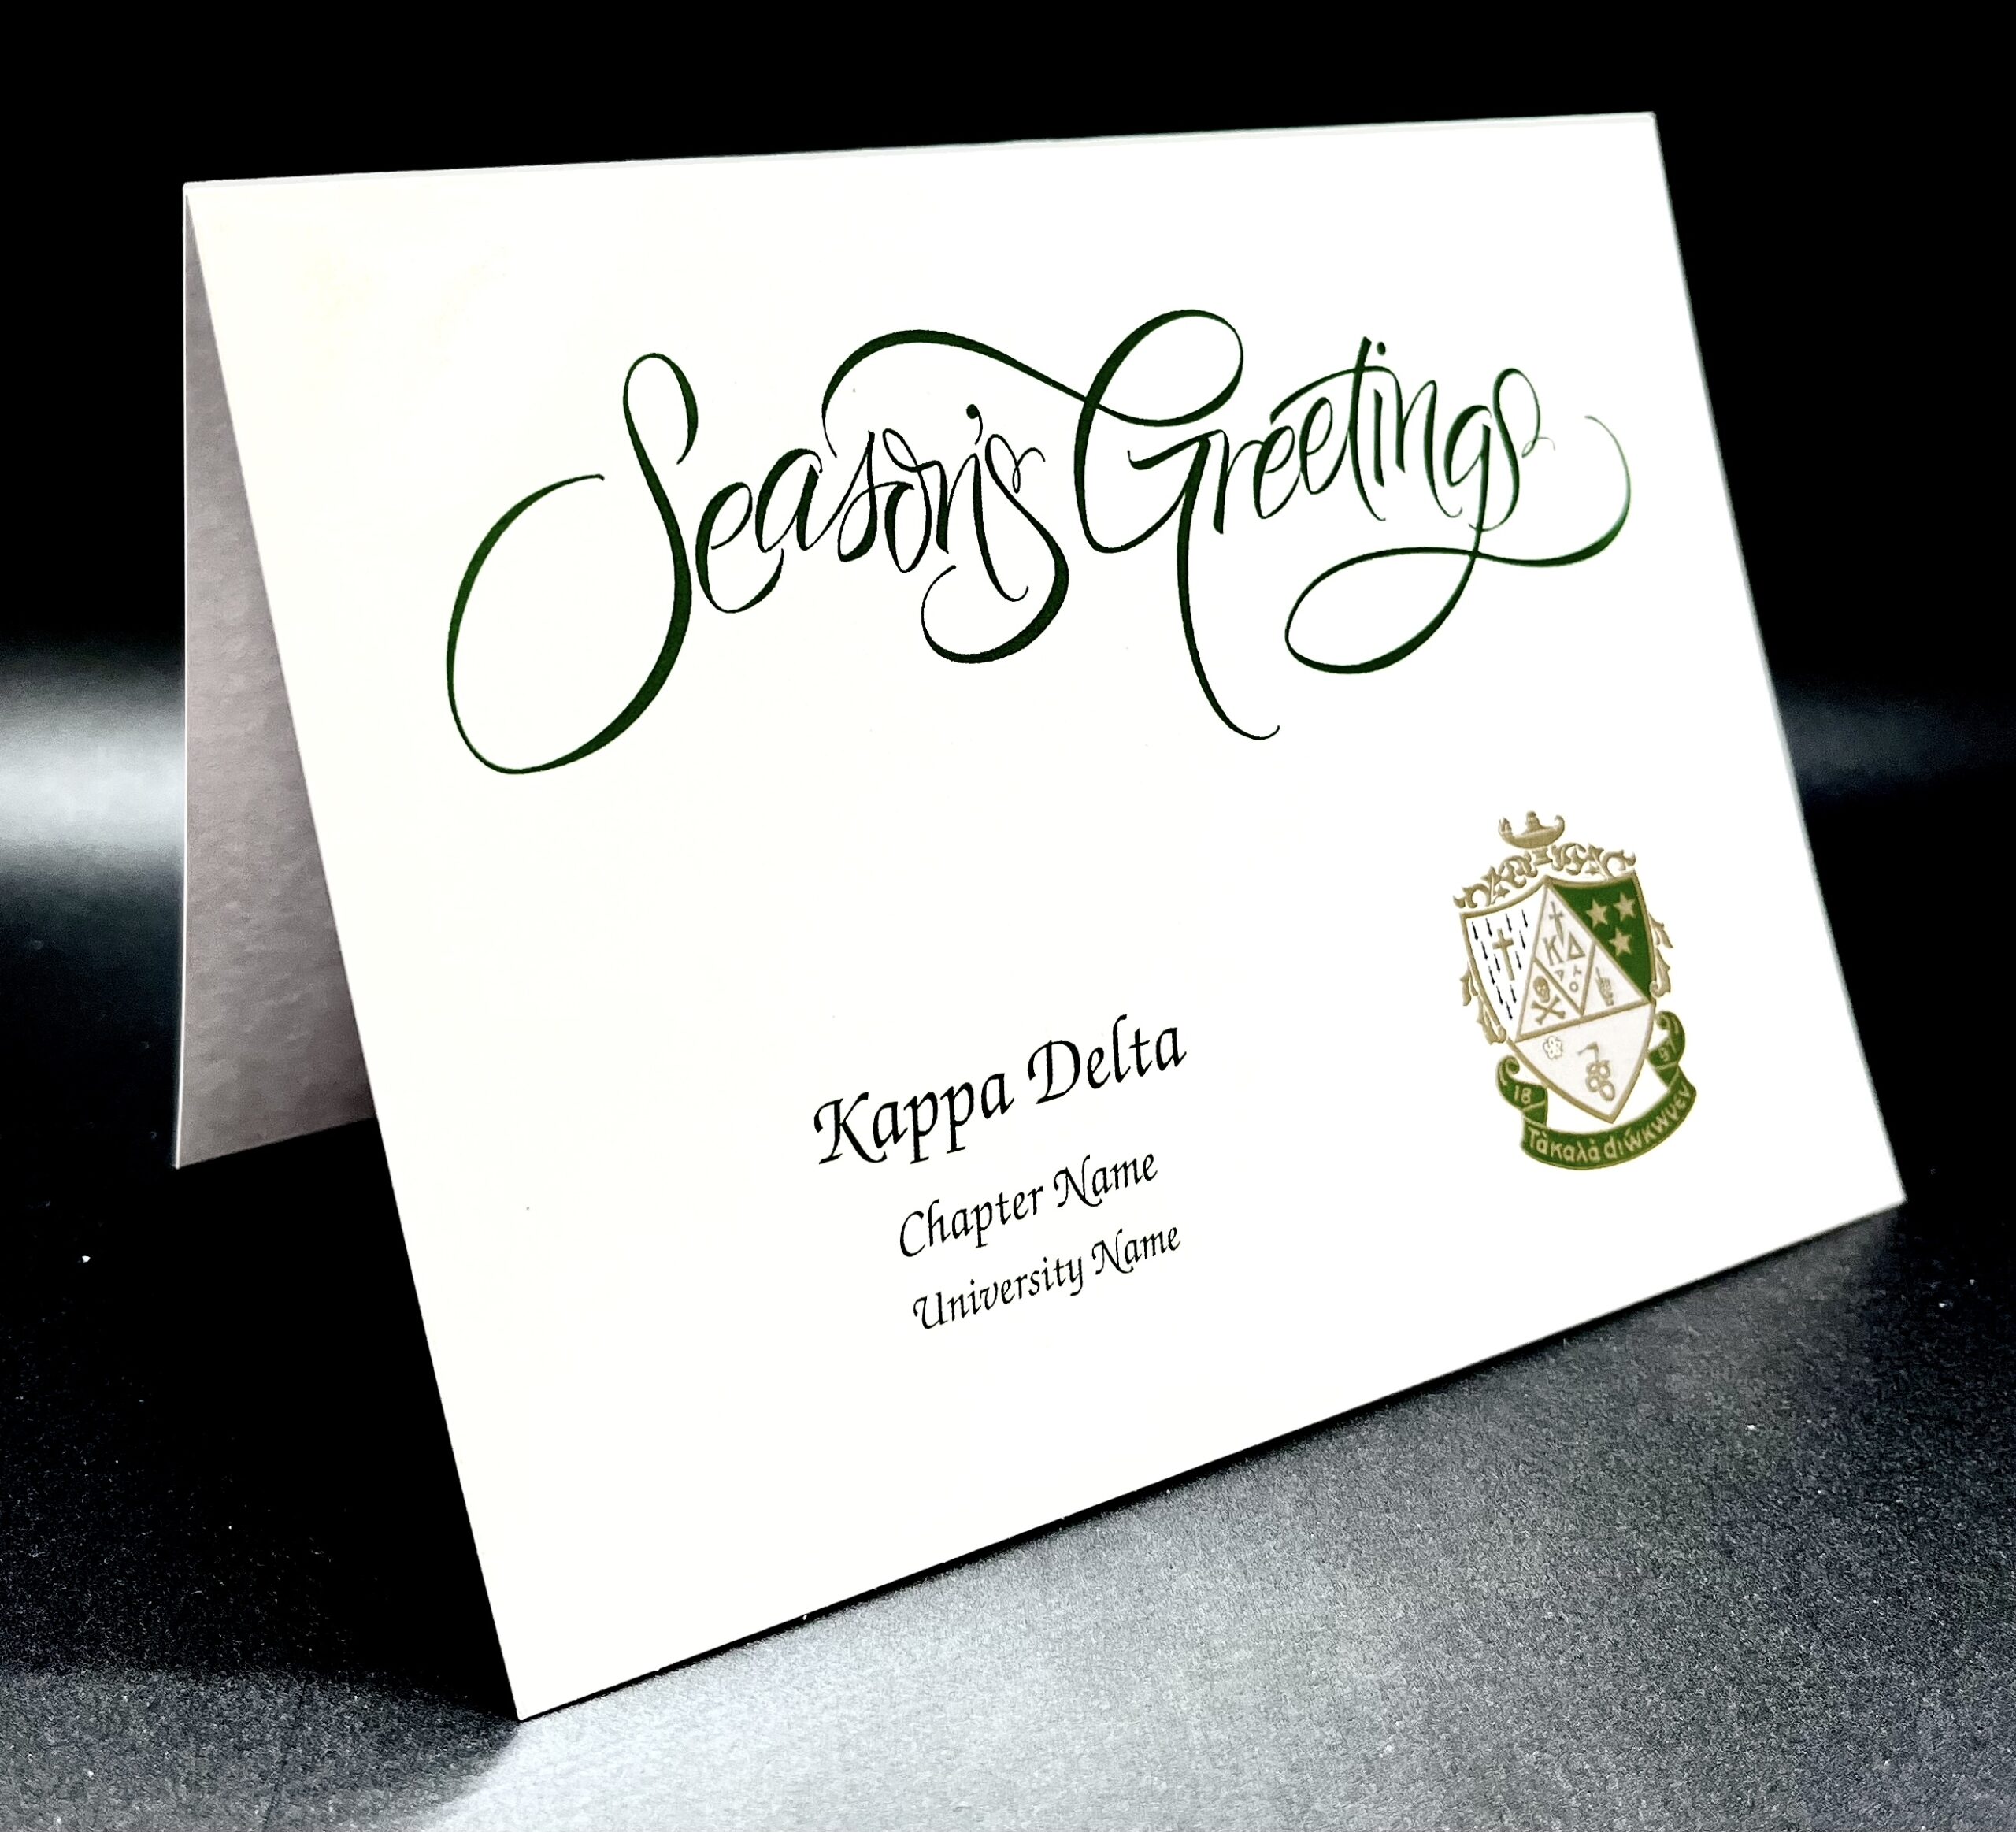 Seasons Greetings Cards Kappa Delta